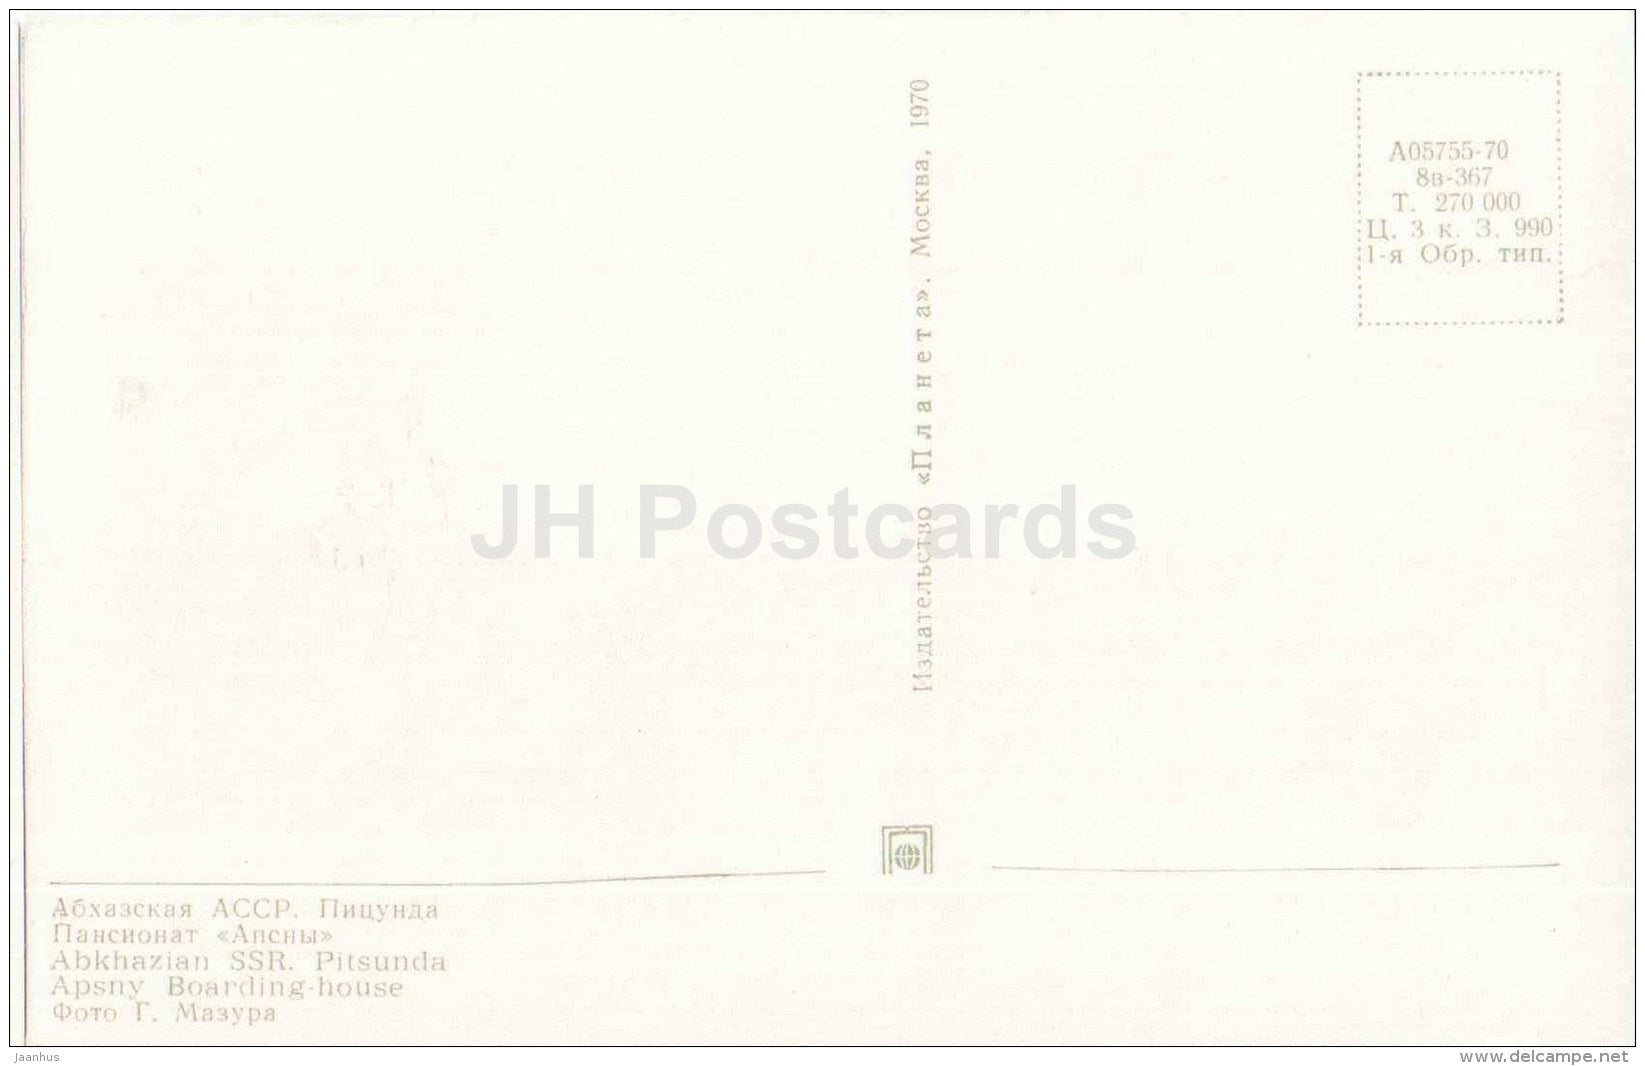 Apsny boarding house - Pitsunda - Abkhazia - 1970 - Georgia USSR - unused - JH Postcards